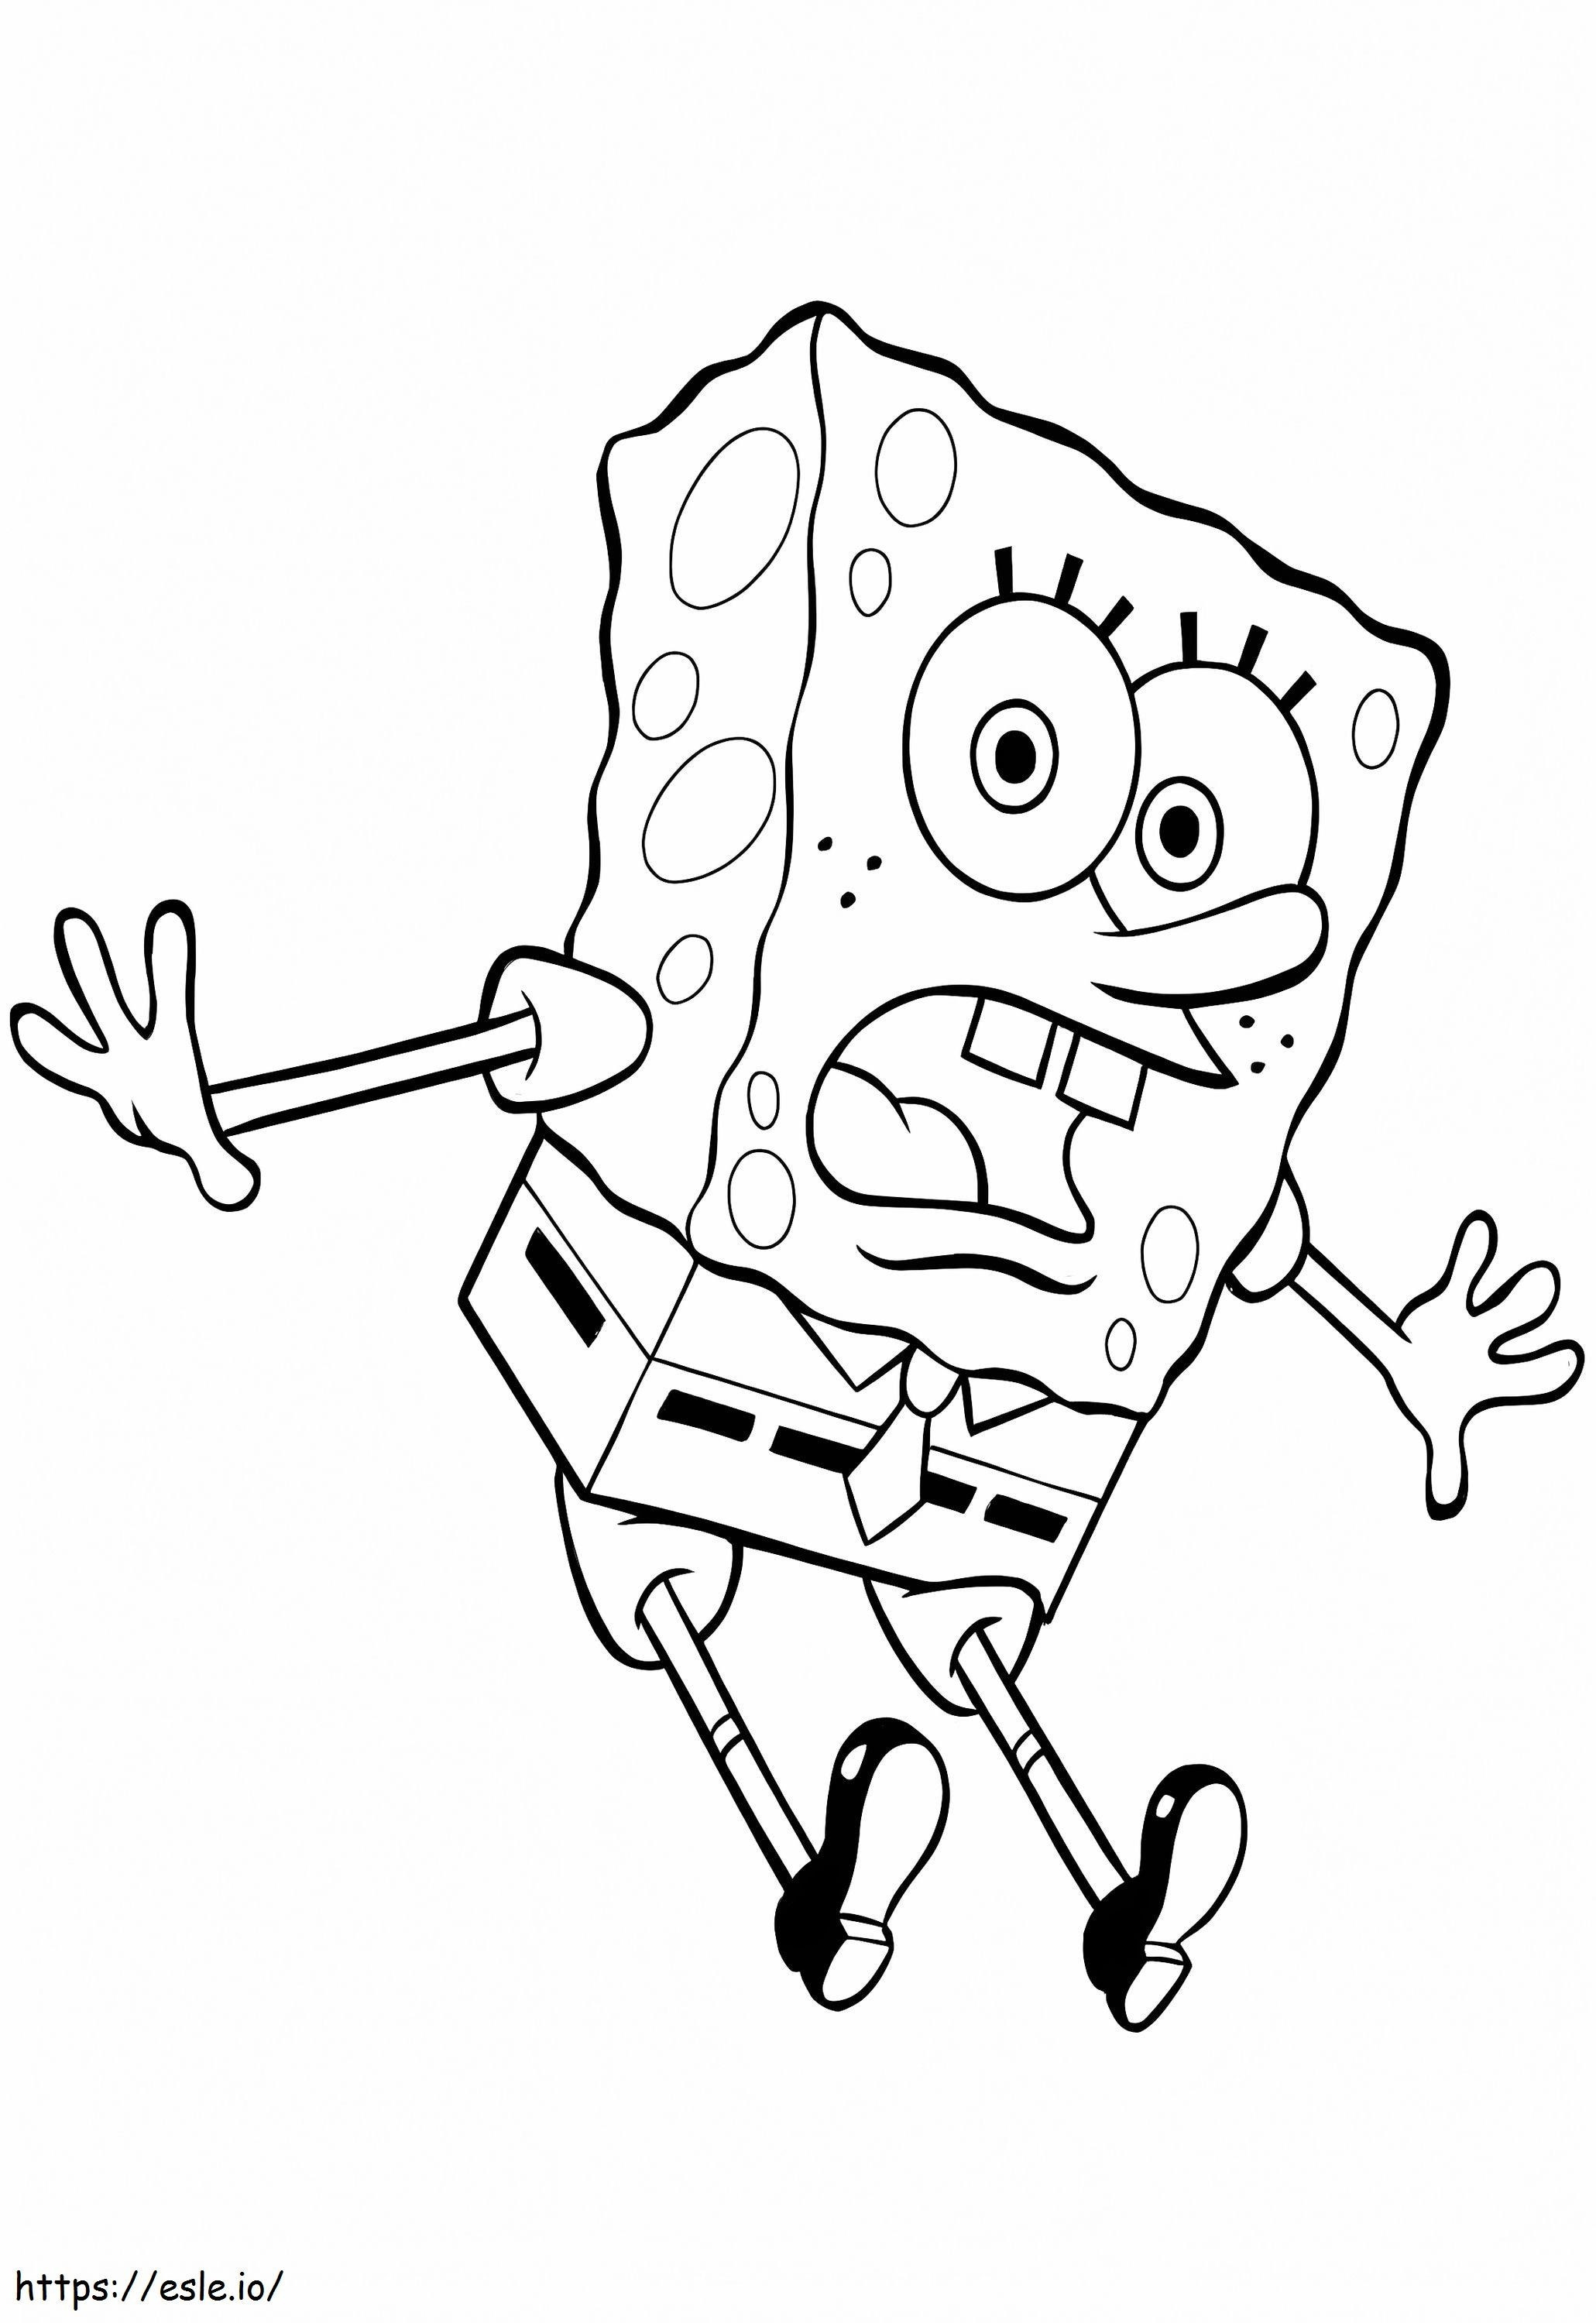 Surprised Spongebob coloring page